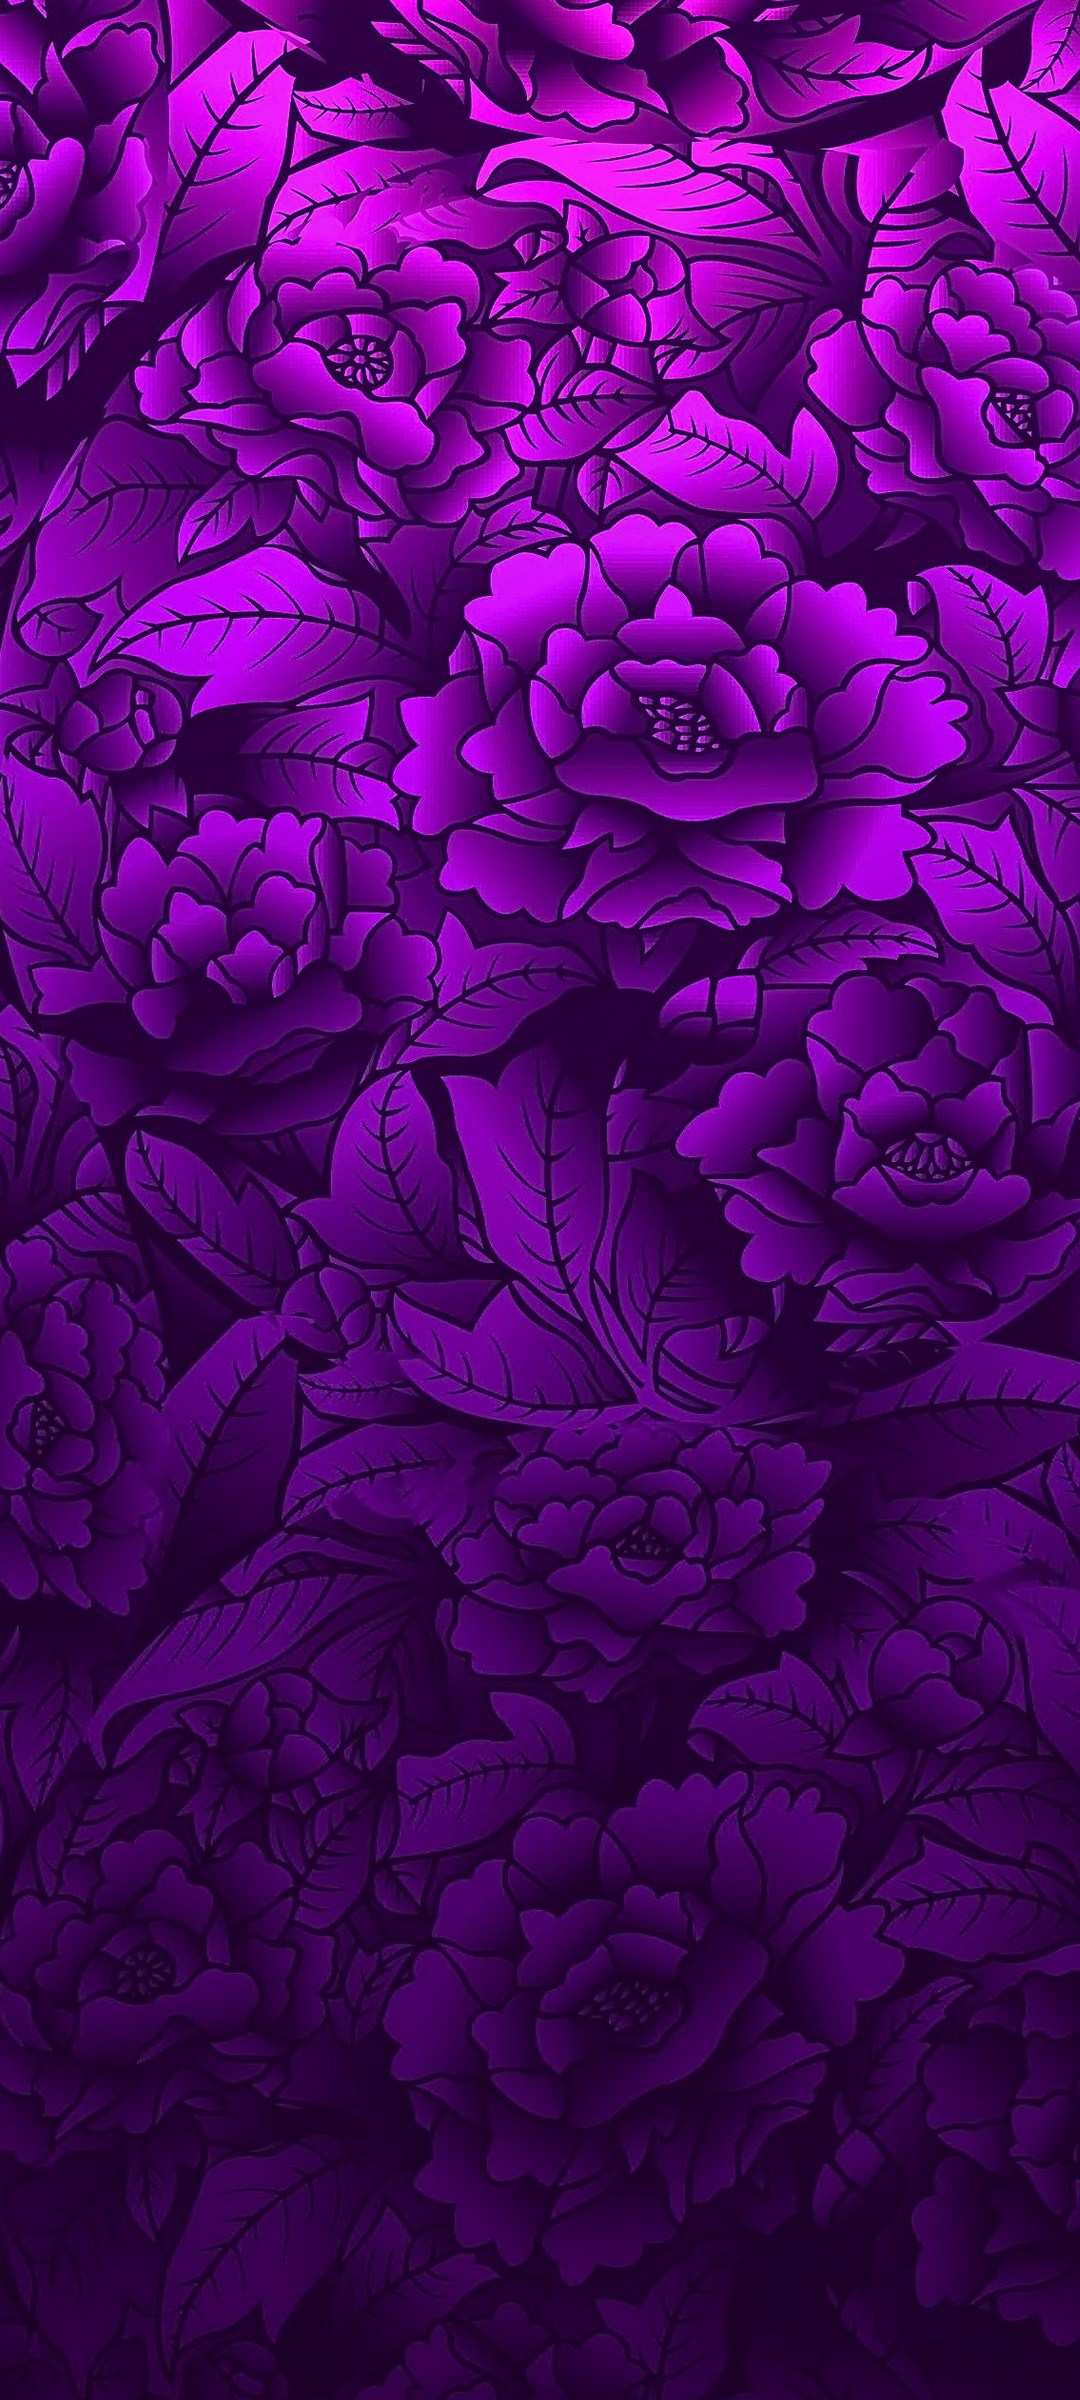 Jokionasibnovlq 選択した画像 スマホ 壁紙 紫 スマホ 壁紙 紫 高画質